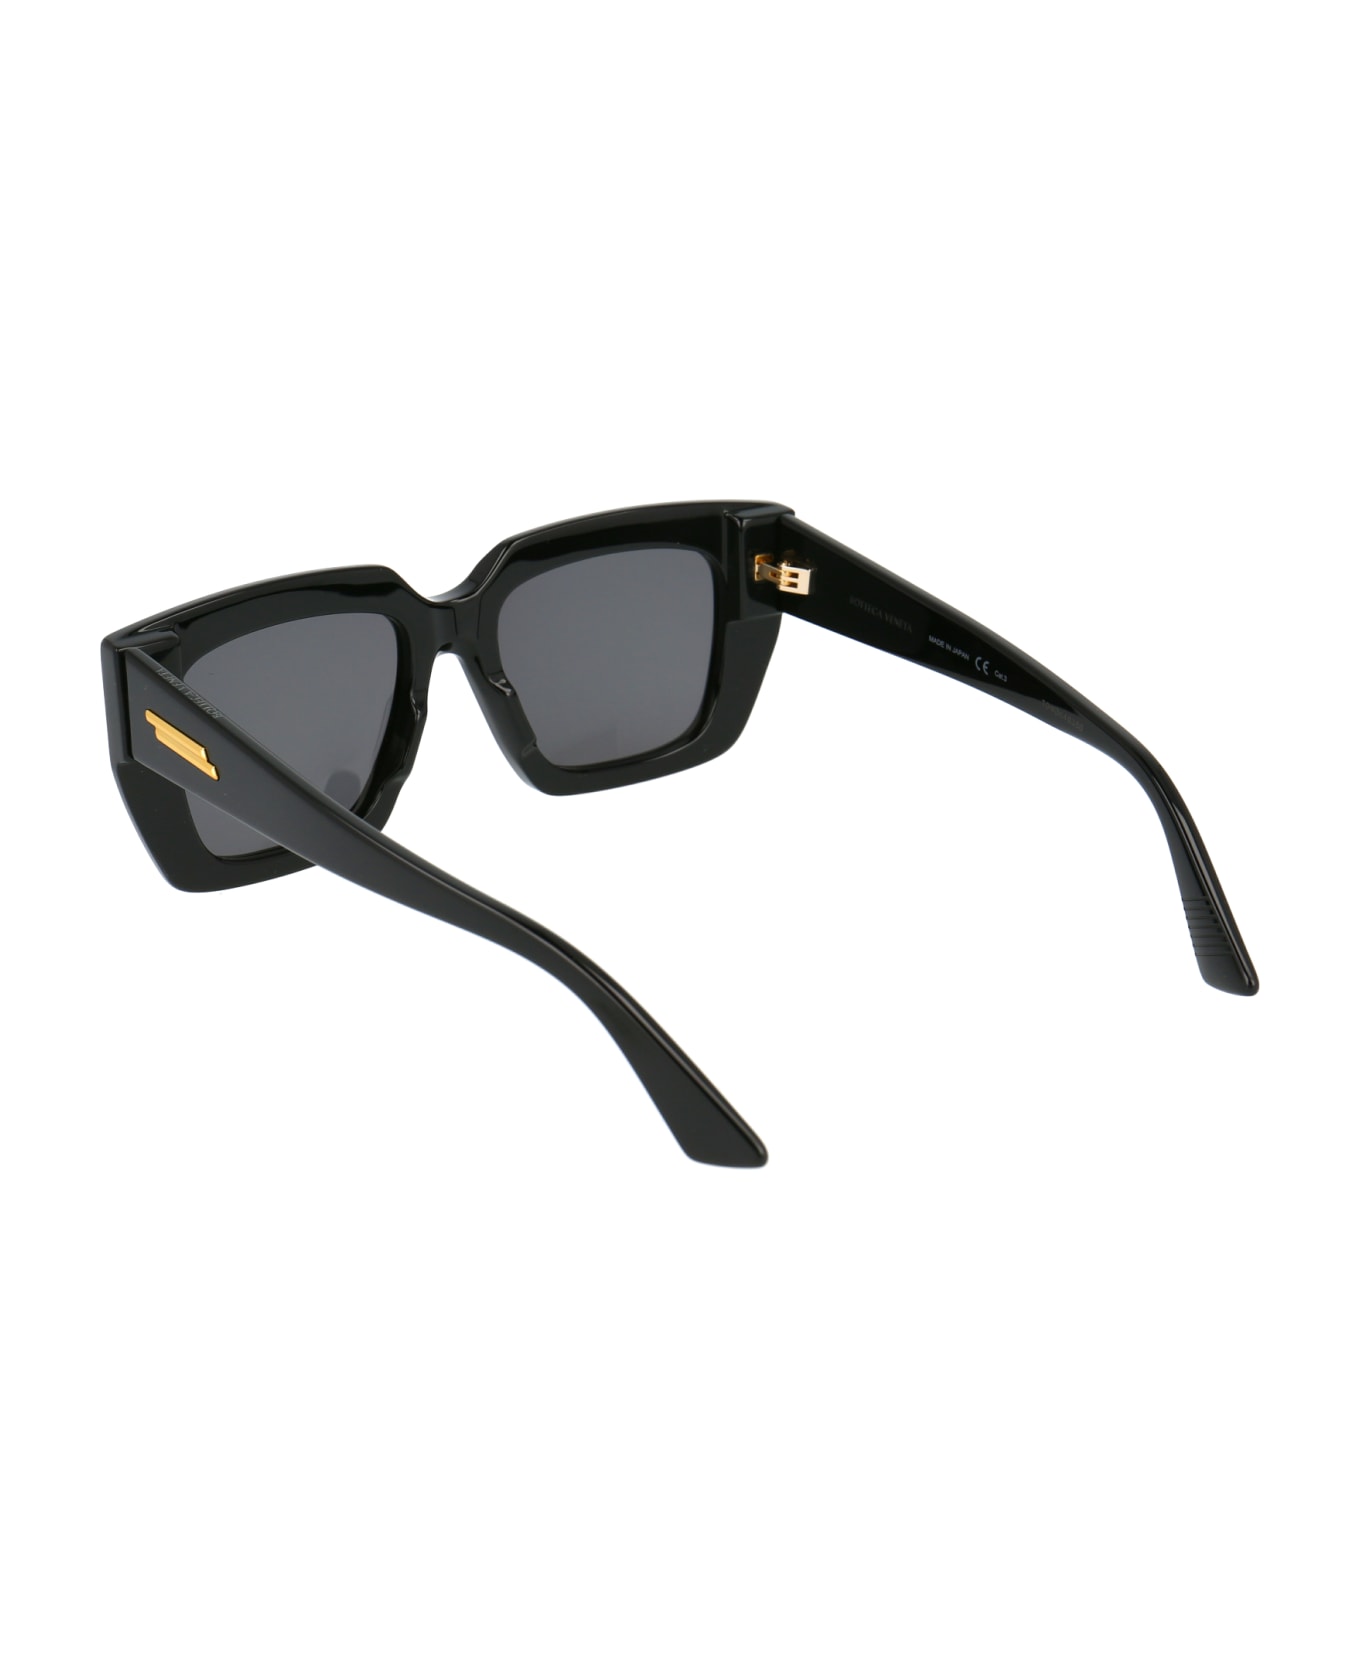 Bottega Veneta Eyewear Bv1030s Sunglasses - 001 BLACK BLACK GREY サングラス